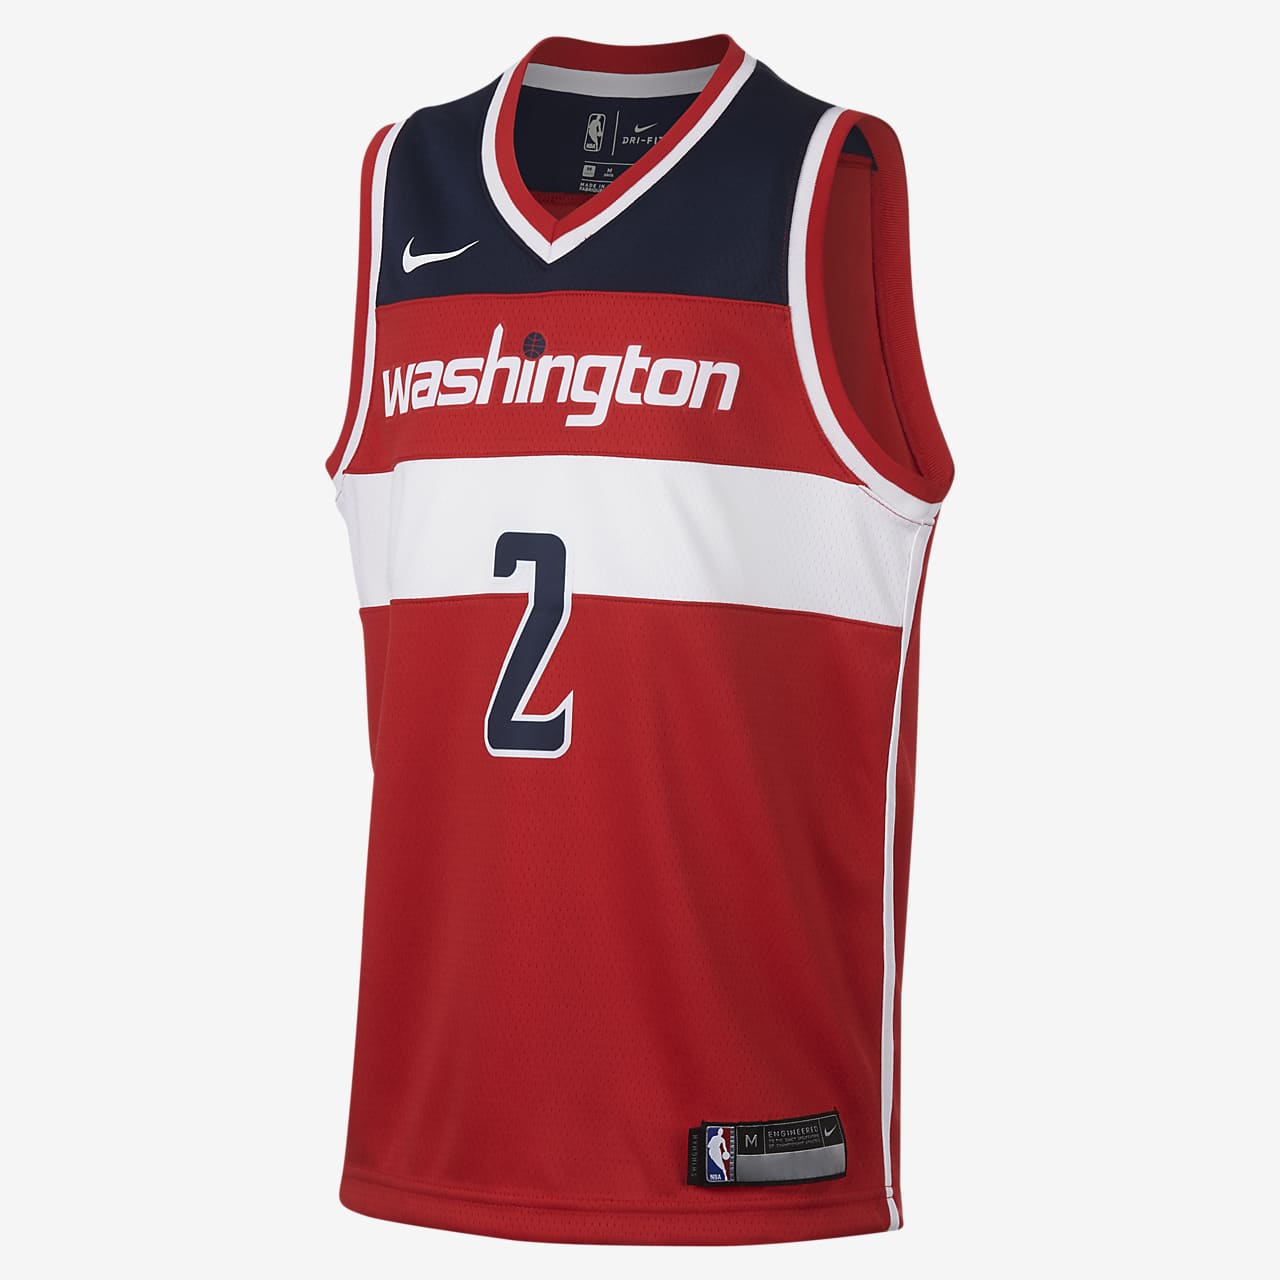 Washington Wizards Jersey / The washington wizards are an american